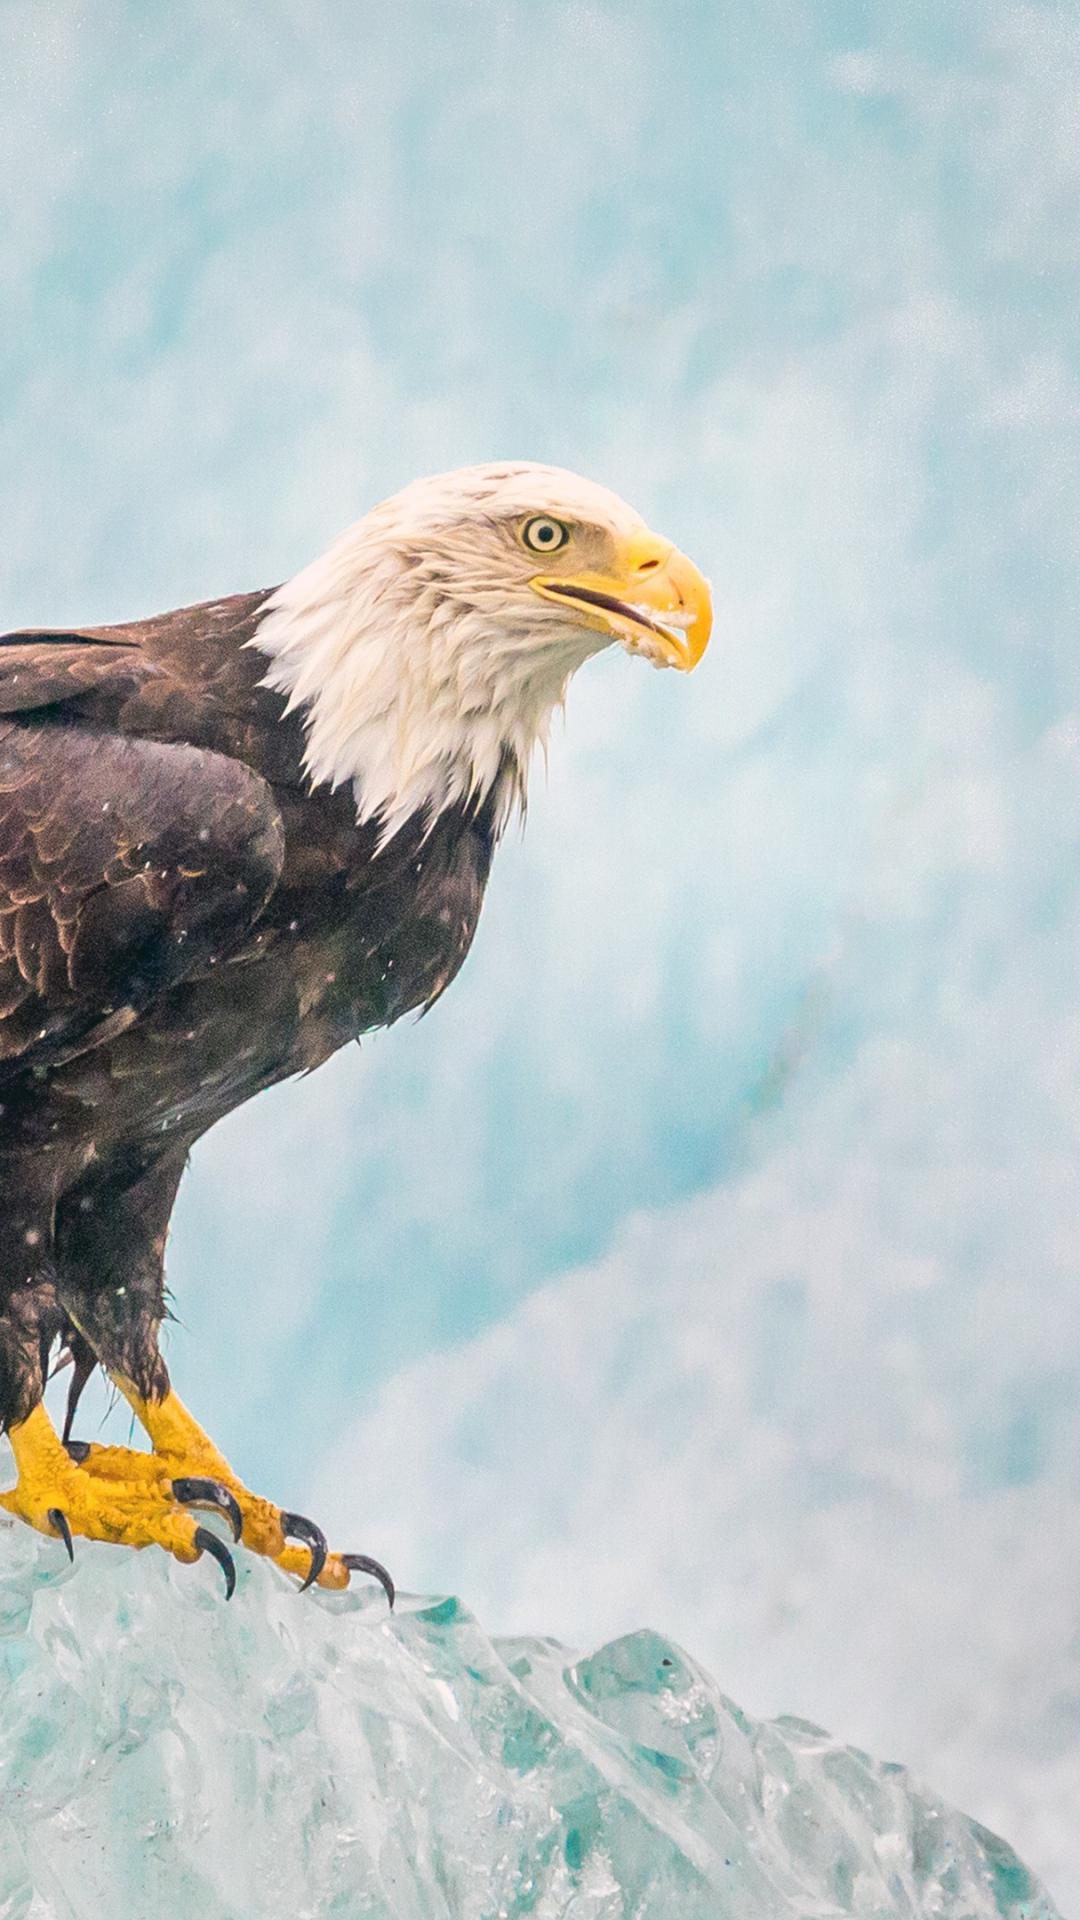 Eagle Bird Predator Ice iPhone 8 Wallpaper Free Download